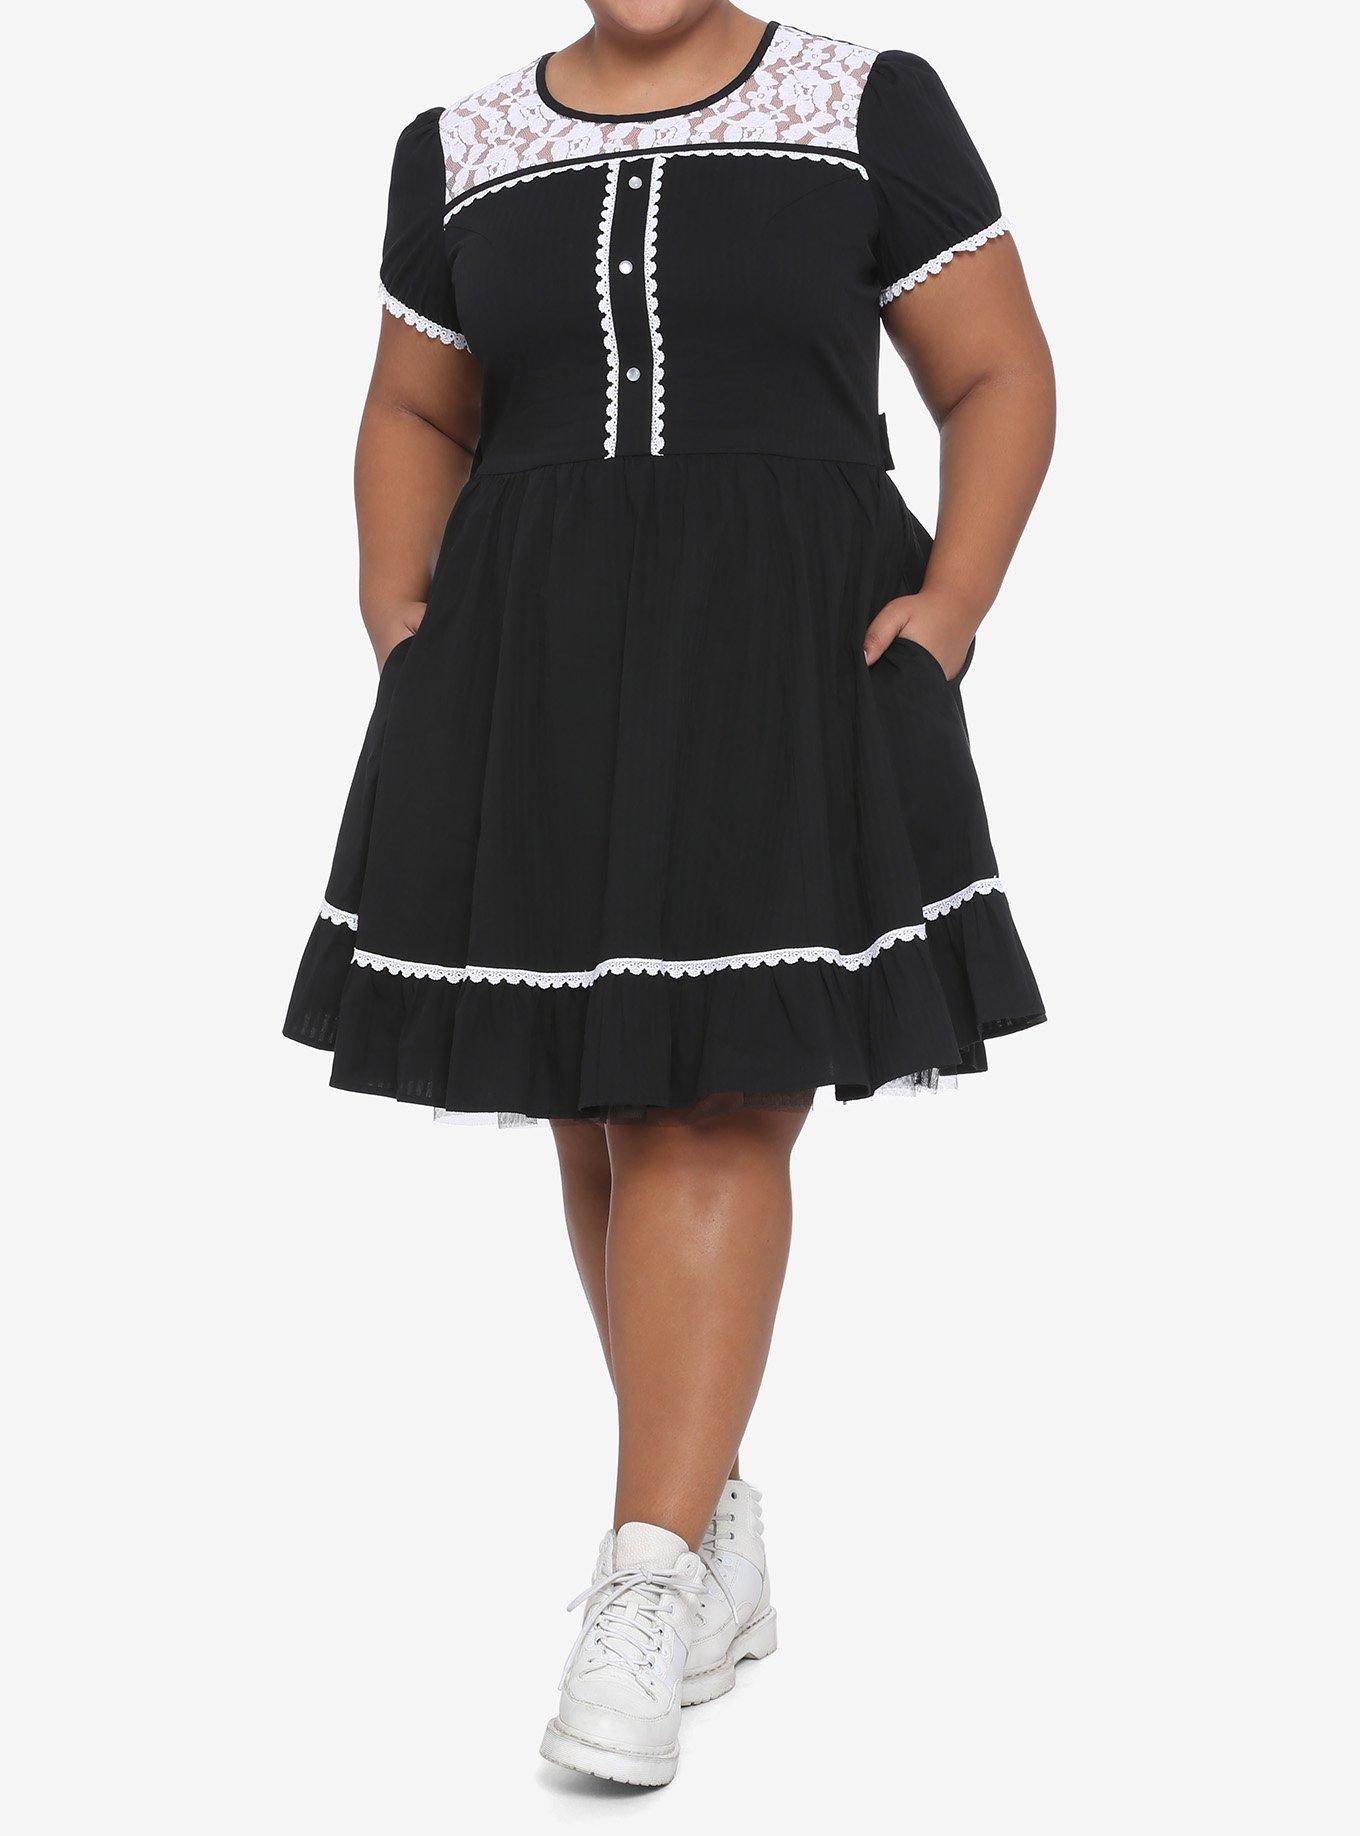 Black & White Lace Panel Dress Plus Size, BLACK, alternate